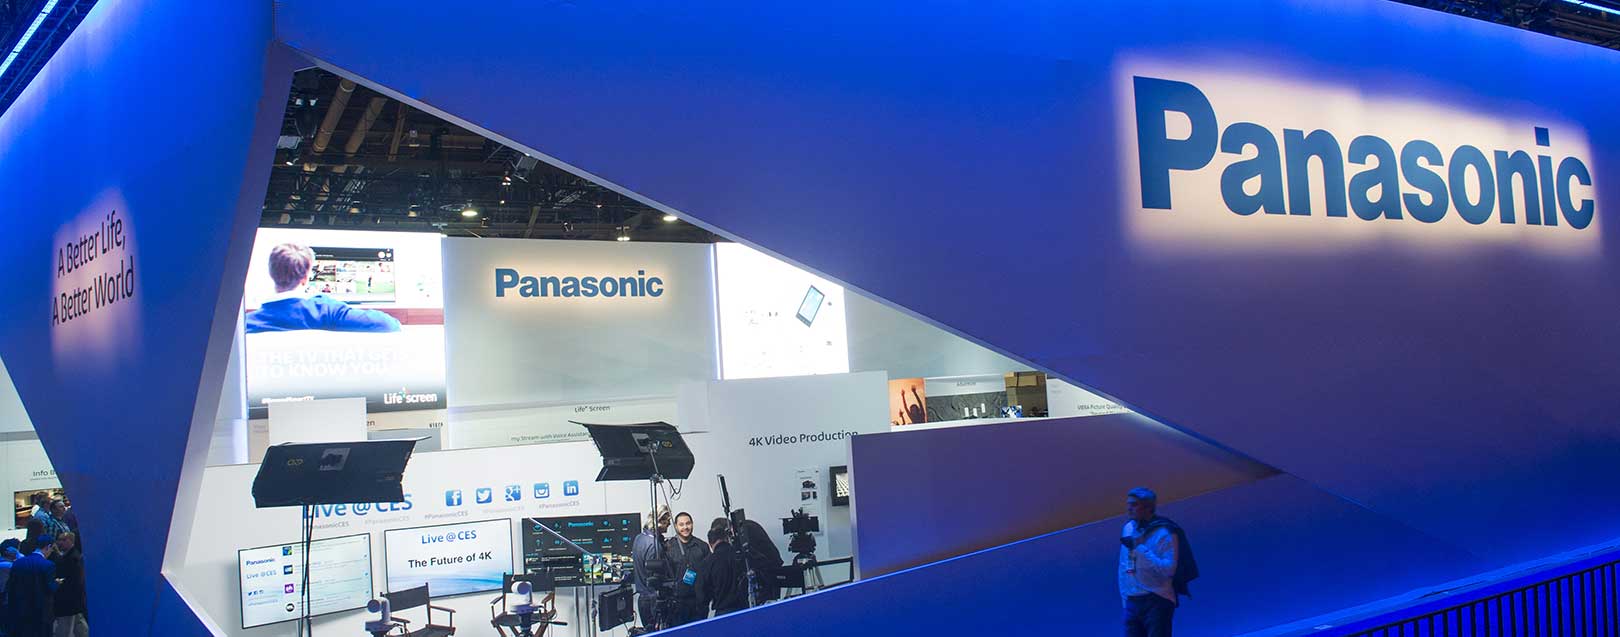 Panasonic targets Bangladesh, Africa as new markets